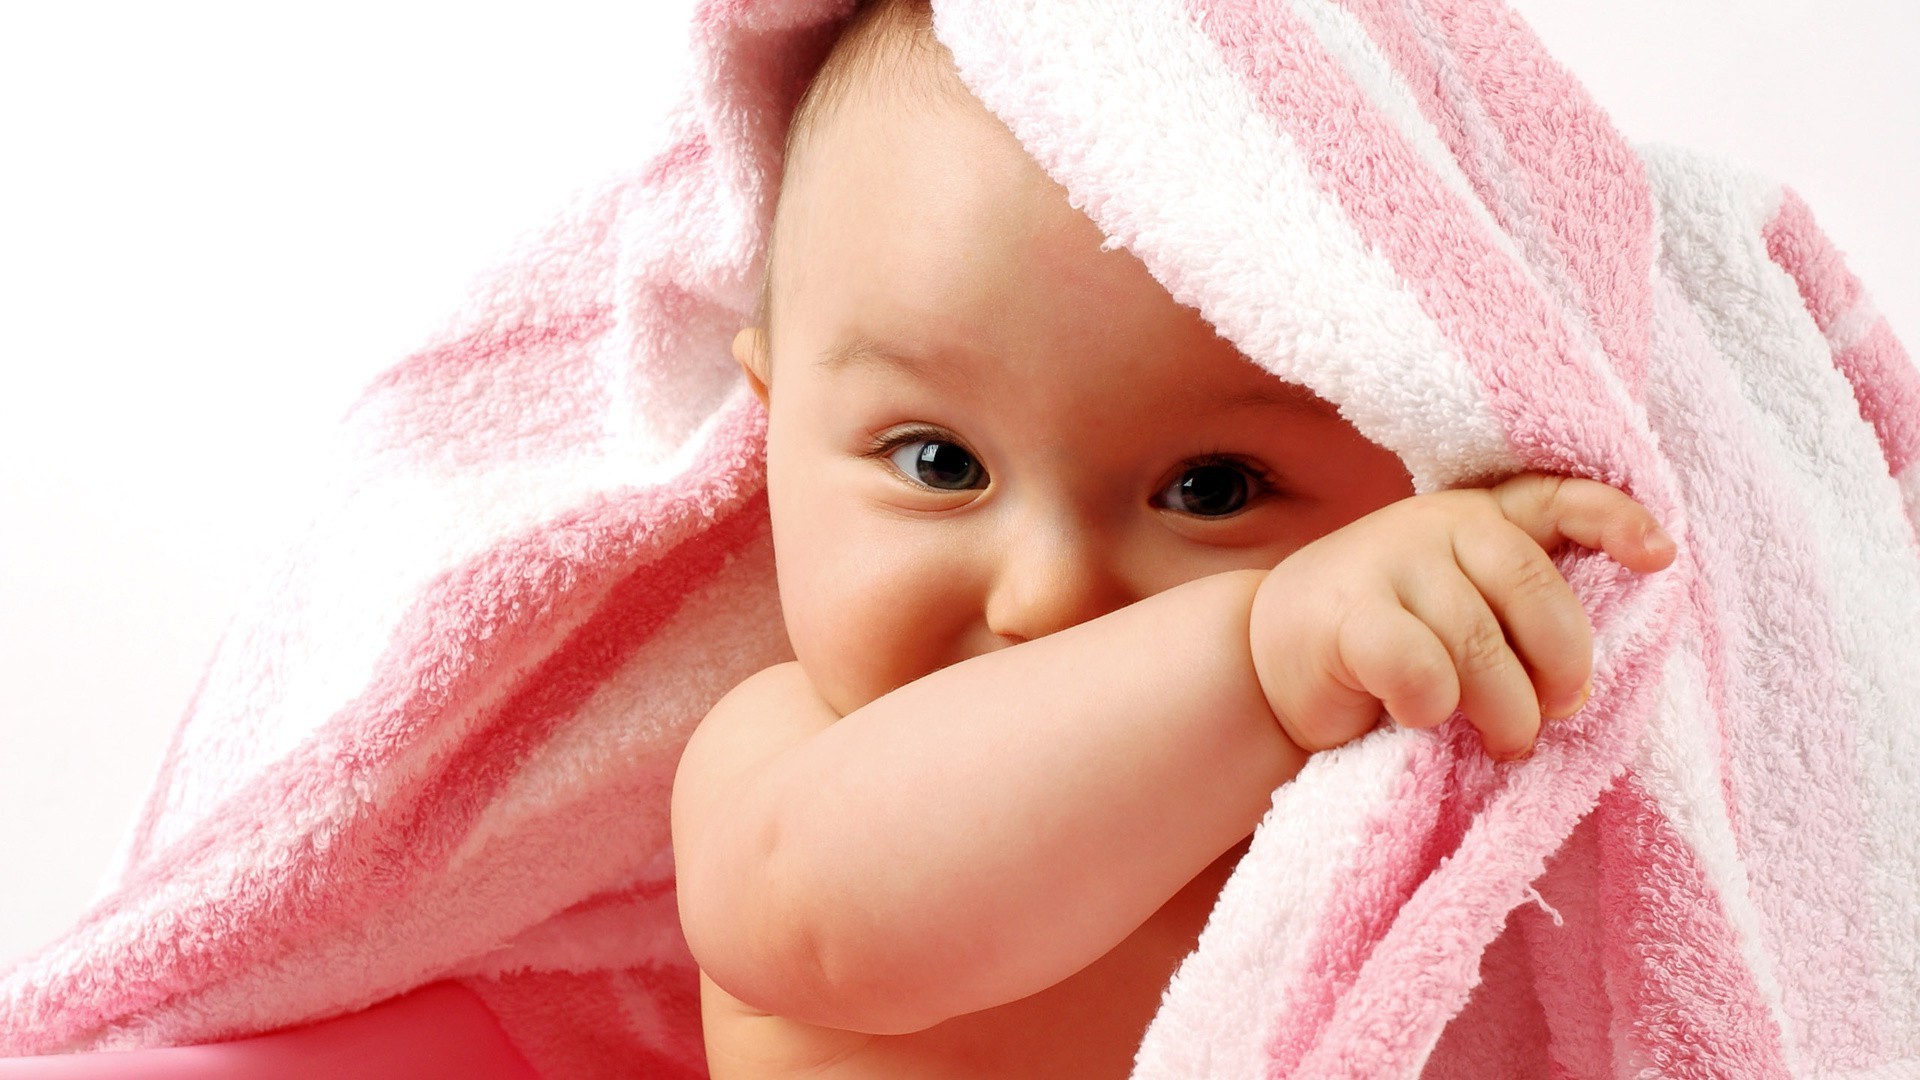 babies baby child cute little skin towel clean newborn bath innocence face beautiful